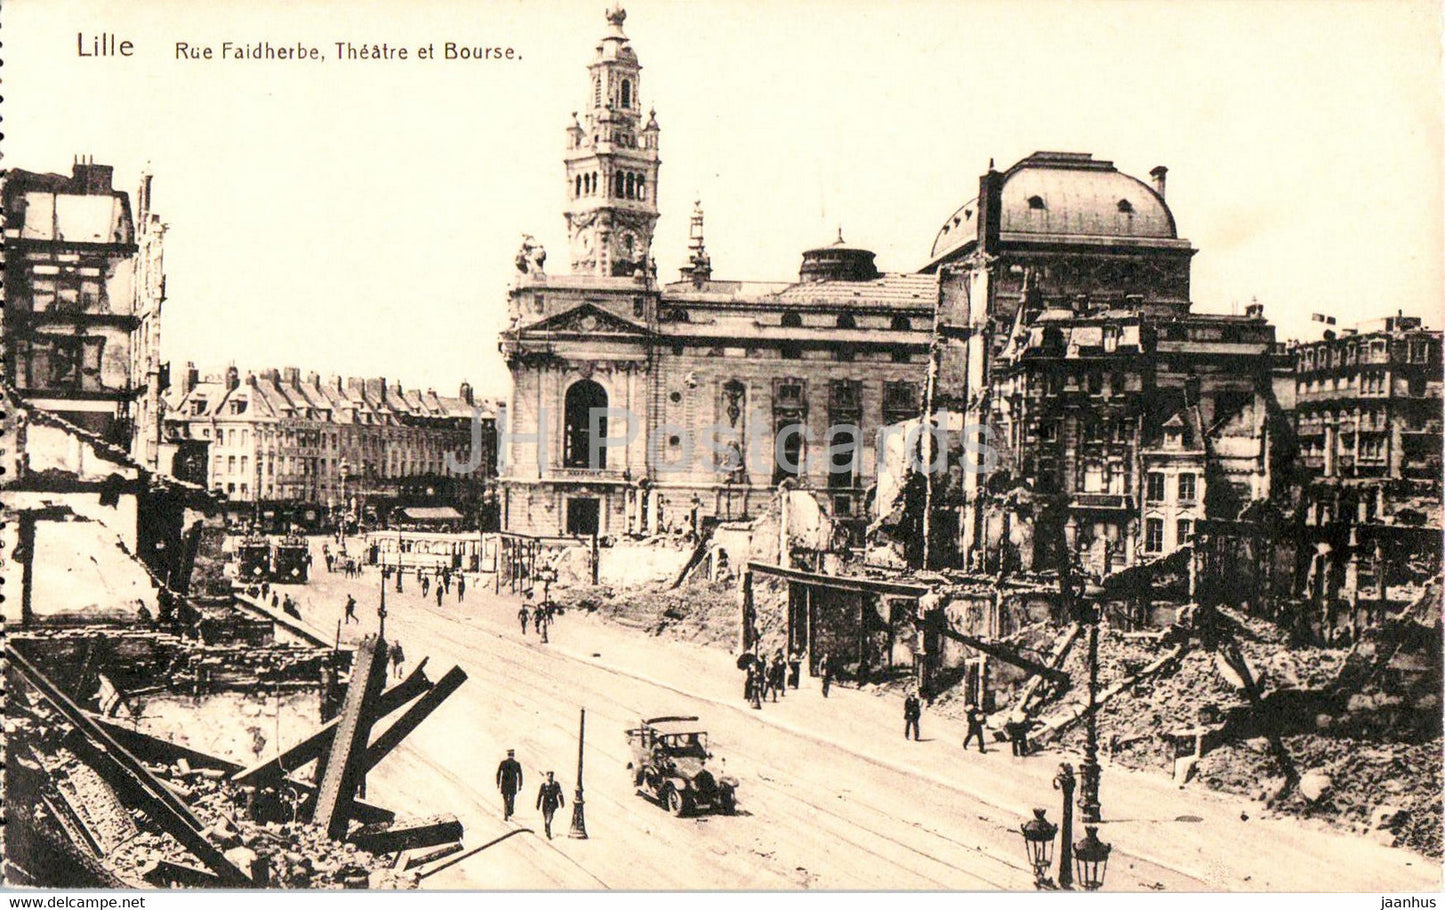 Lille - Rue Faidherbe - Theatre et Bourse - old postcard - France - unused - JH Postcards